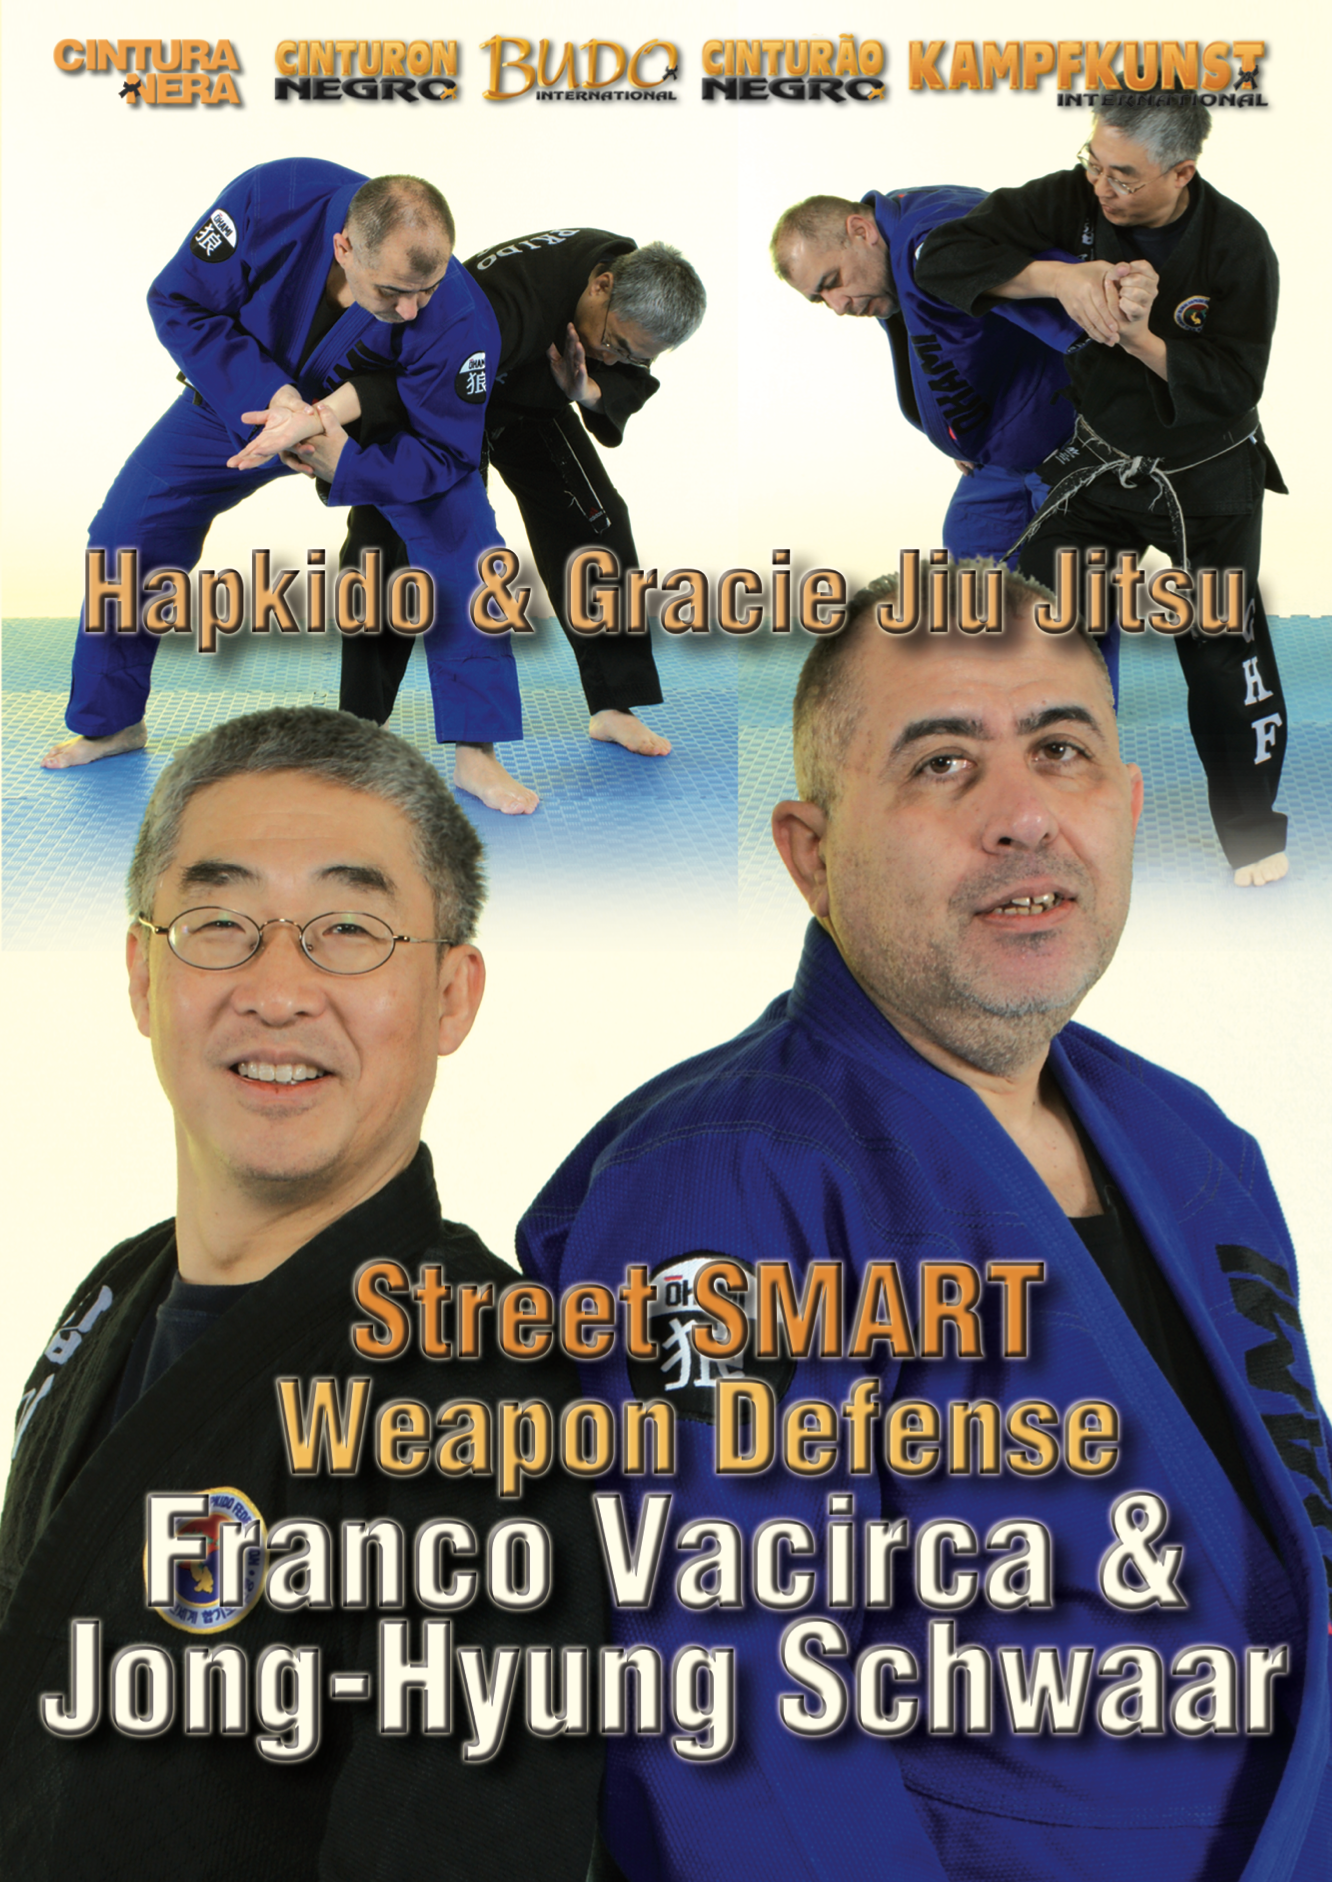 Gracie Jiu-Jitsu & Hapkido Weapon Defense DVD by Franco Vacirca & Jong Hyung